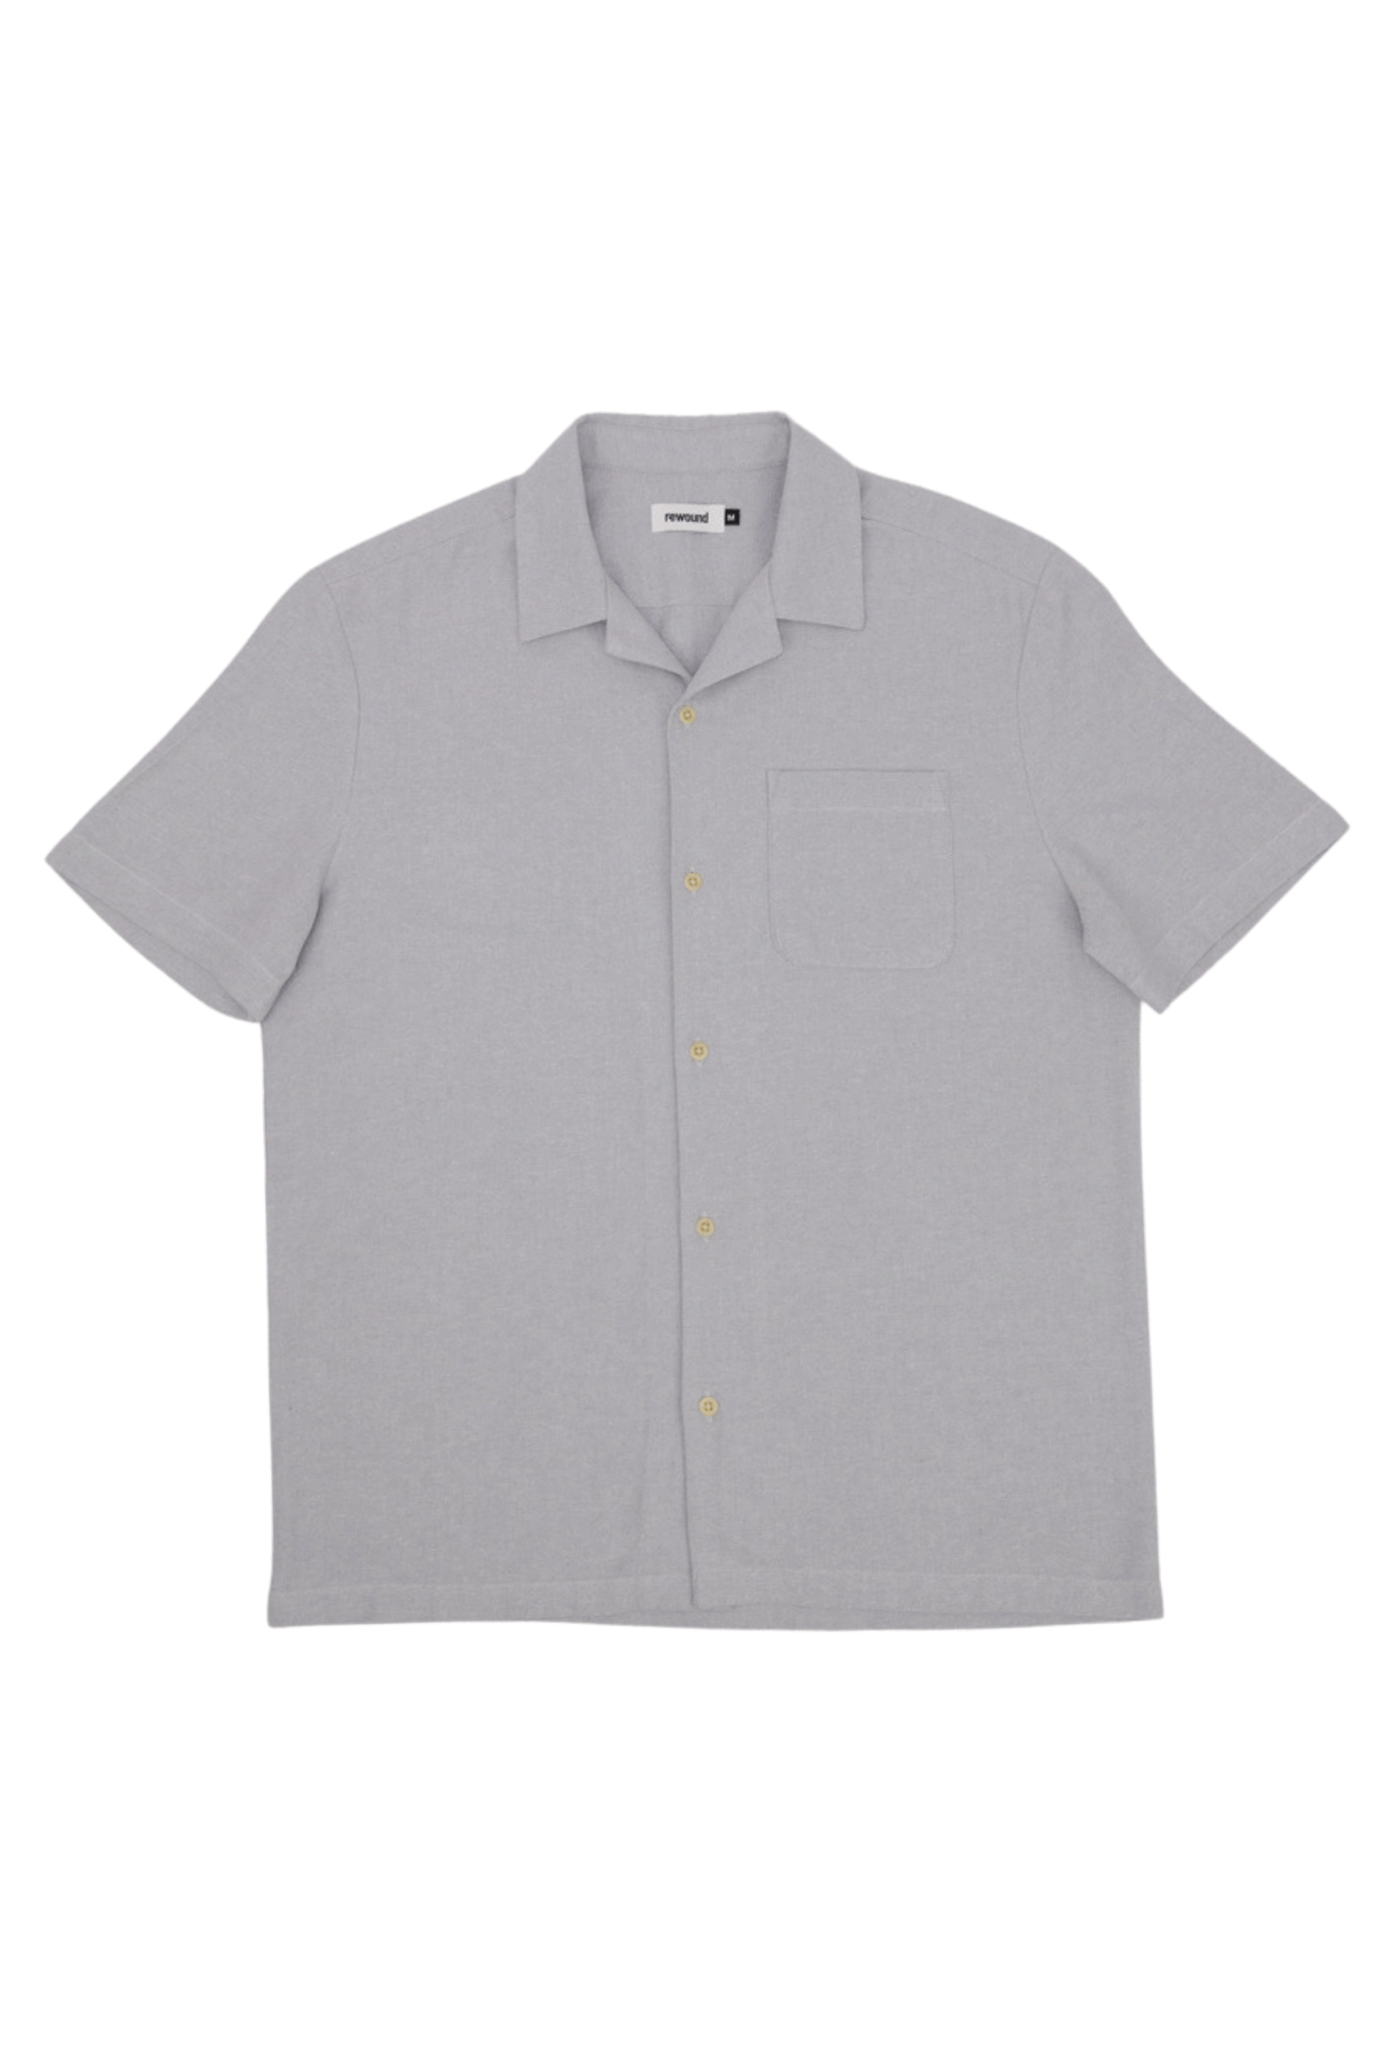 Alexander Short Sleeve Grey Shirt Flat Lay